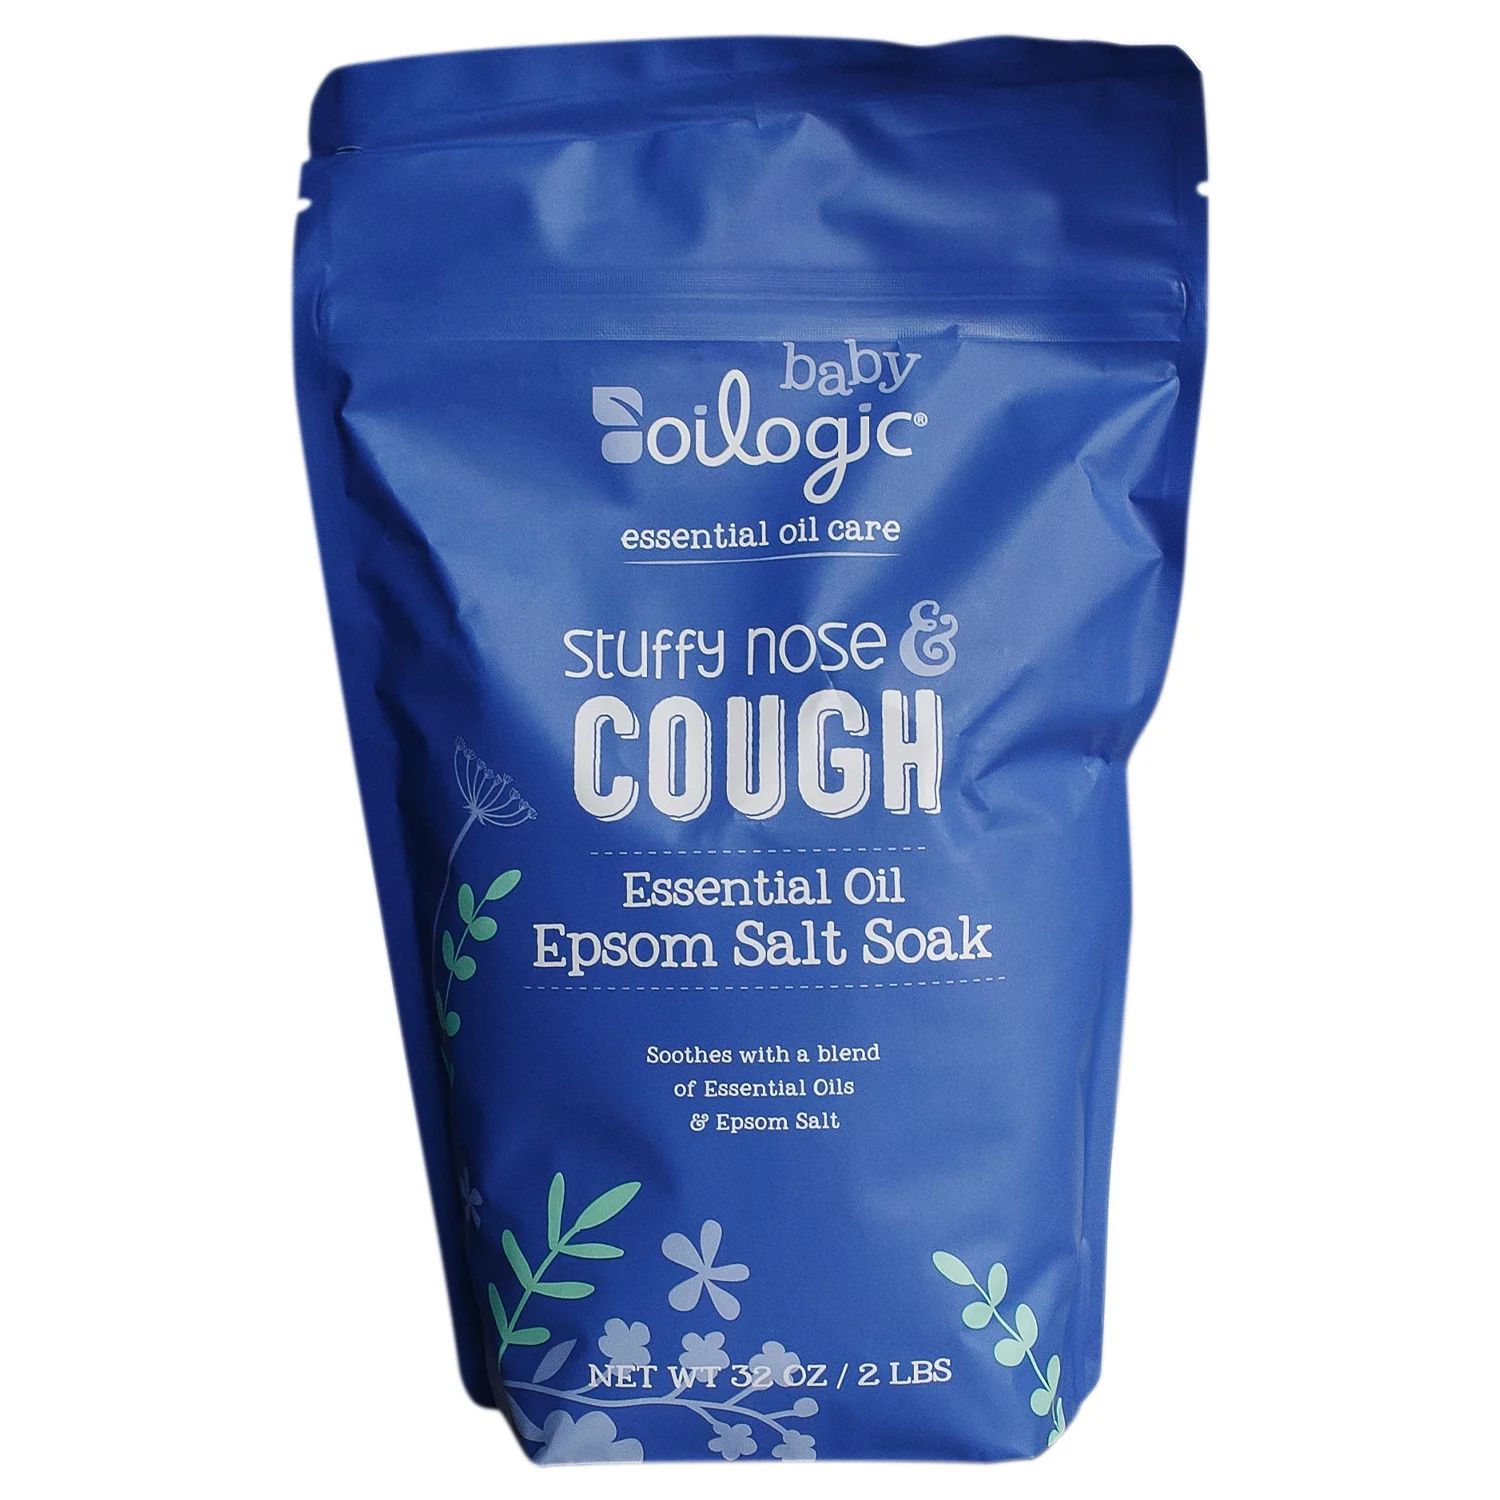 Oilogic Stuffy Nose & Cough Baby Essential Oil Epsom Soak, 2 lbs | Walmart (US)